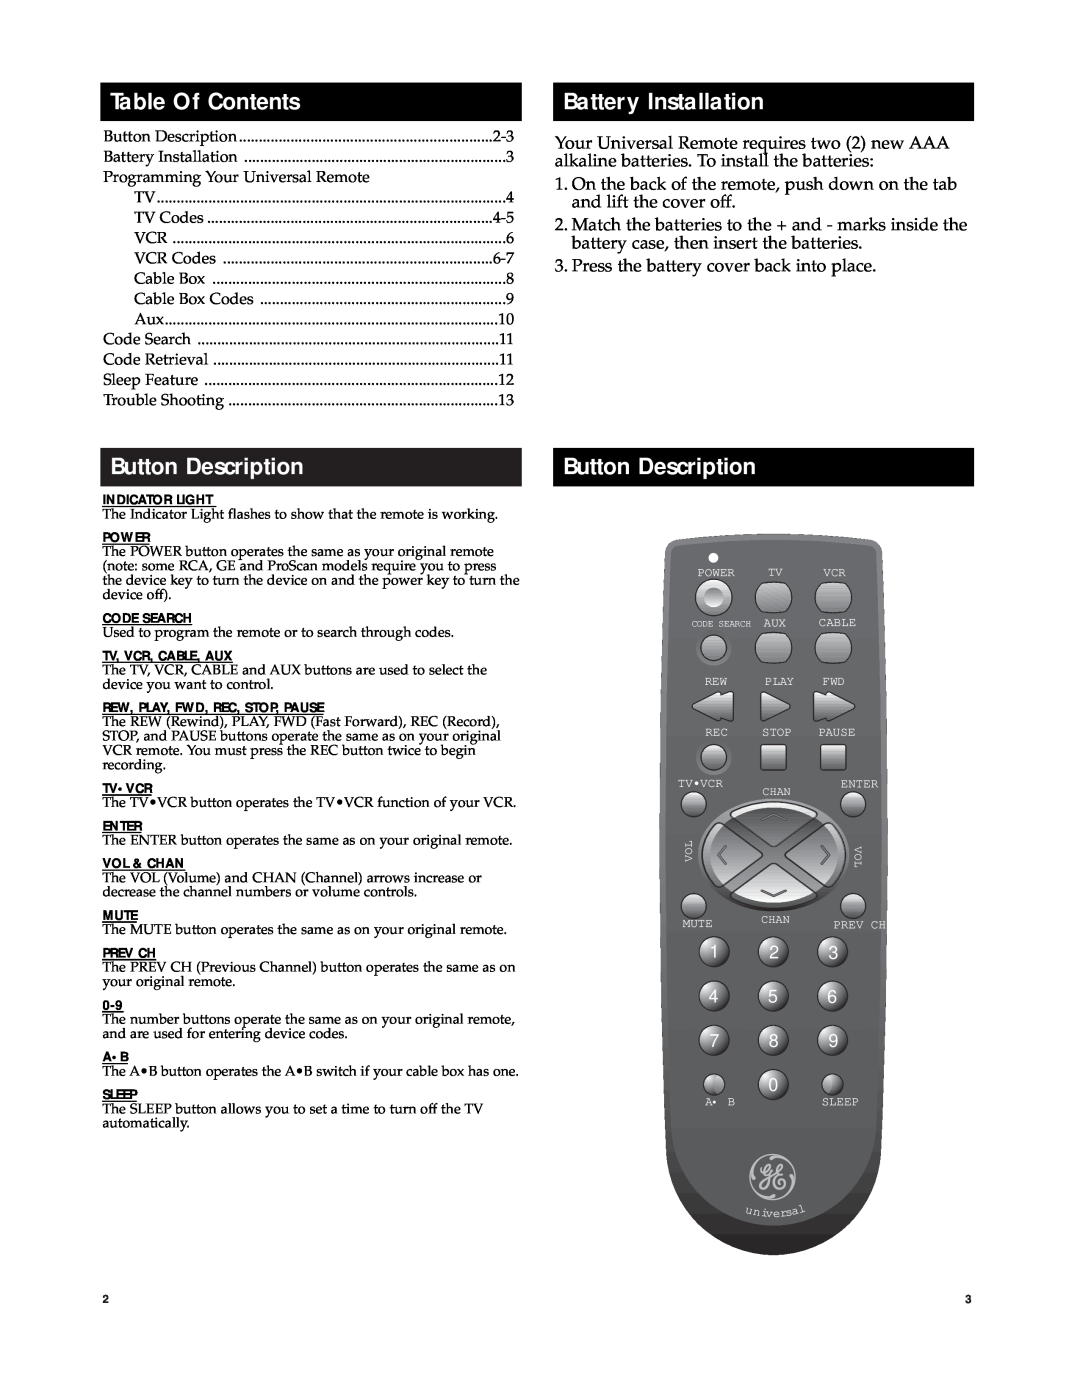 Jasco RM94902 manual Table Of Contents, Battery Installation, Button Description, 1 2 4 5 7 8 